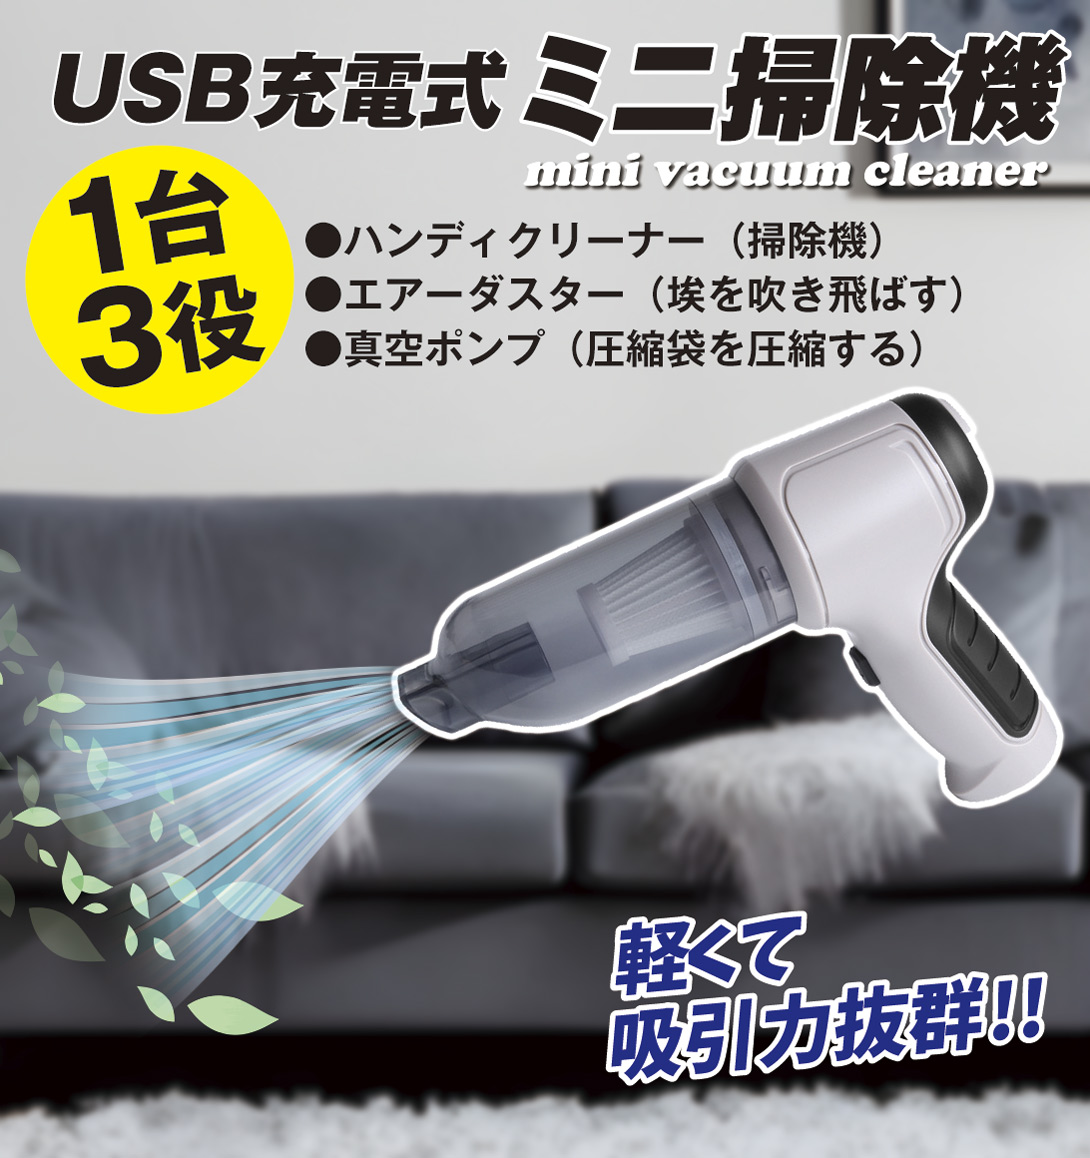 USB充電式ミニハンドヘルド掃除機 小型コンパクト